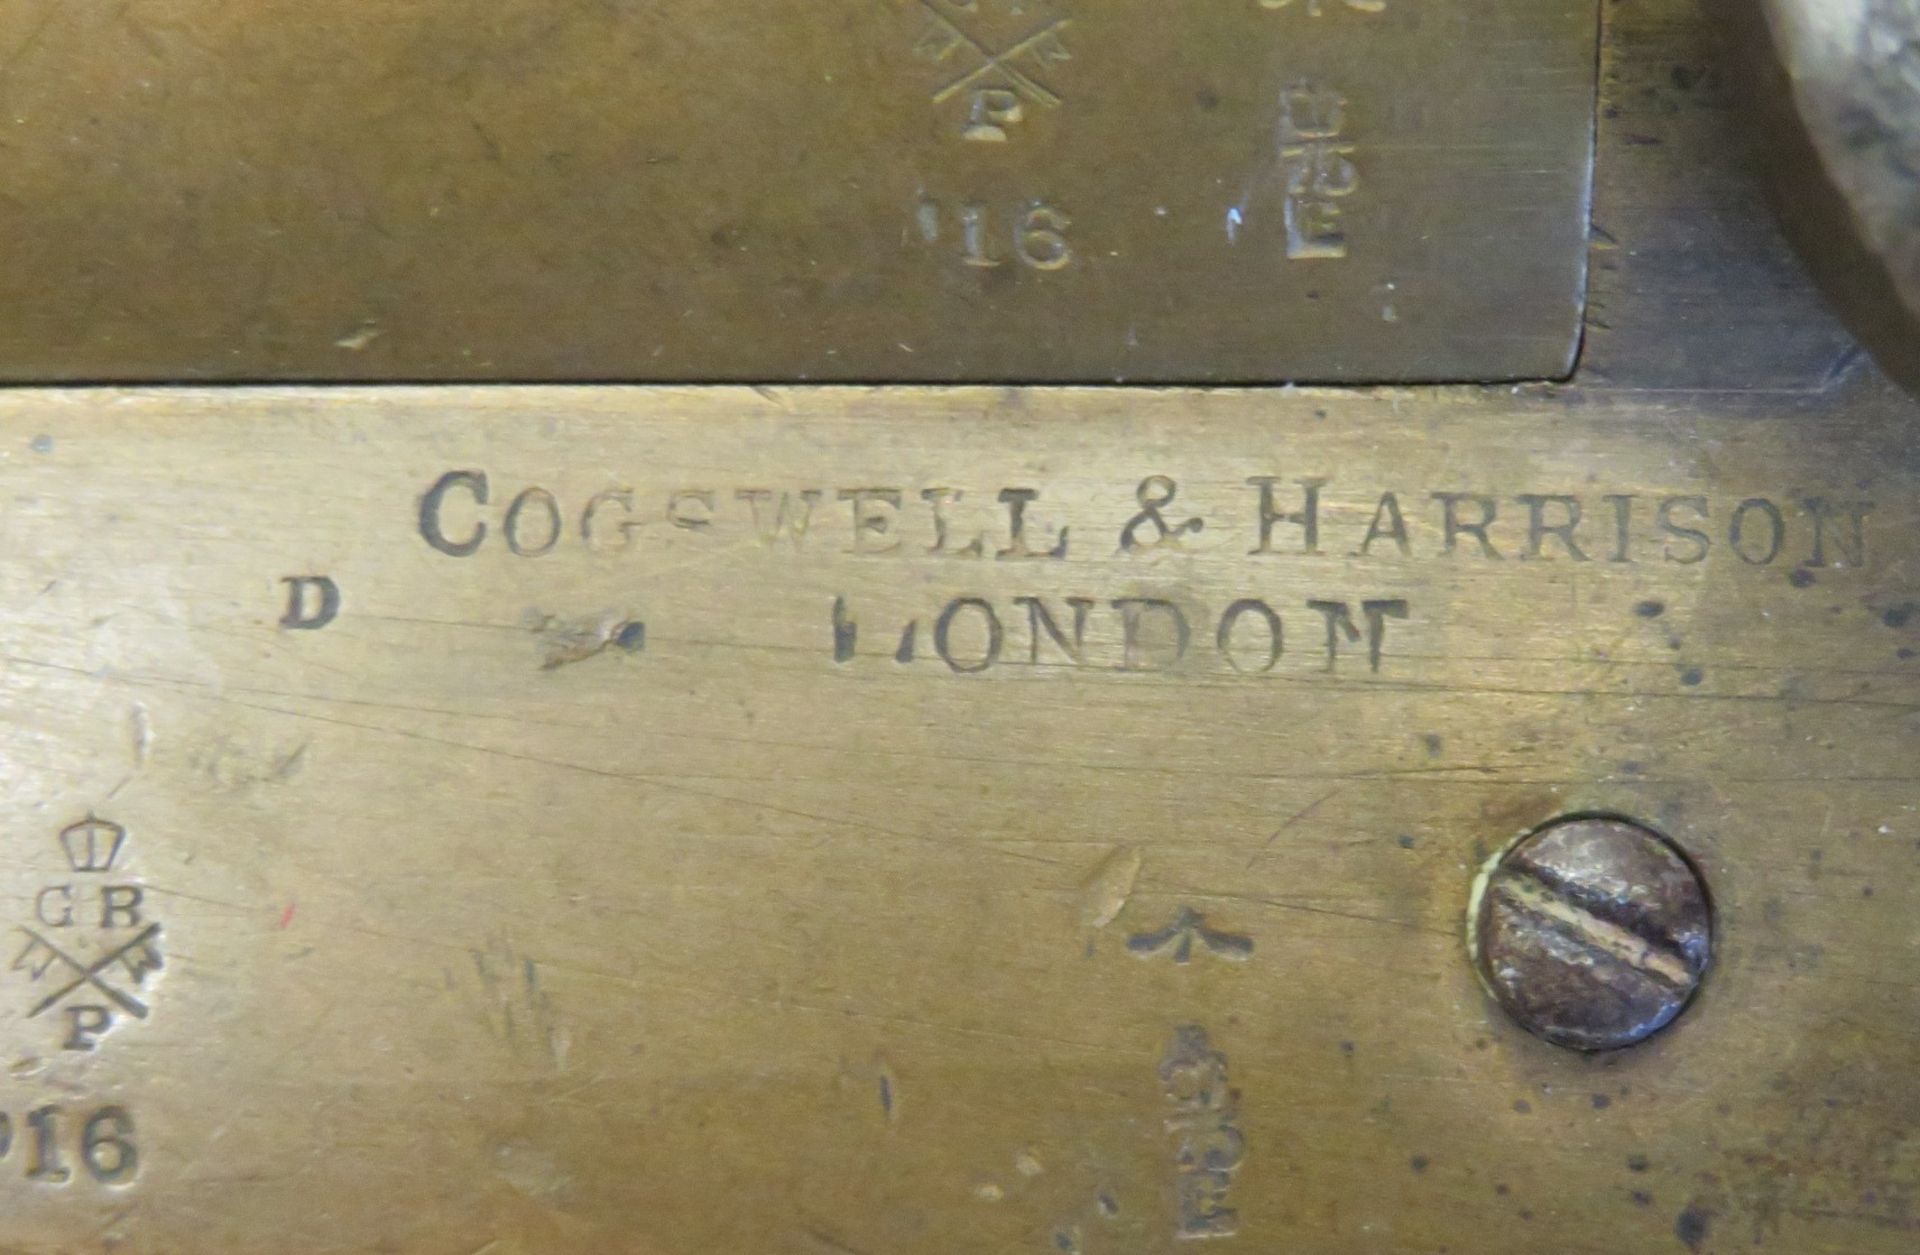 ZURÜCKGEZOGEN - Signalpistole, England, 1916, sign. "Cogswell Harrison London", - Image 2 of 2